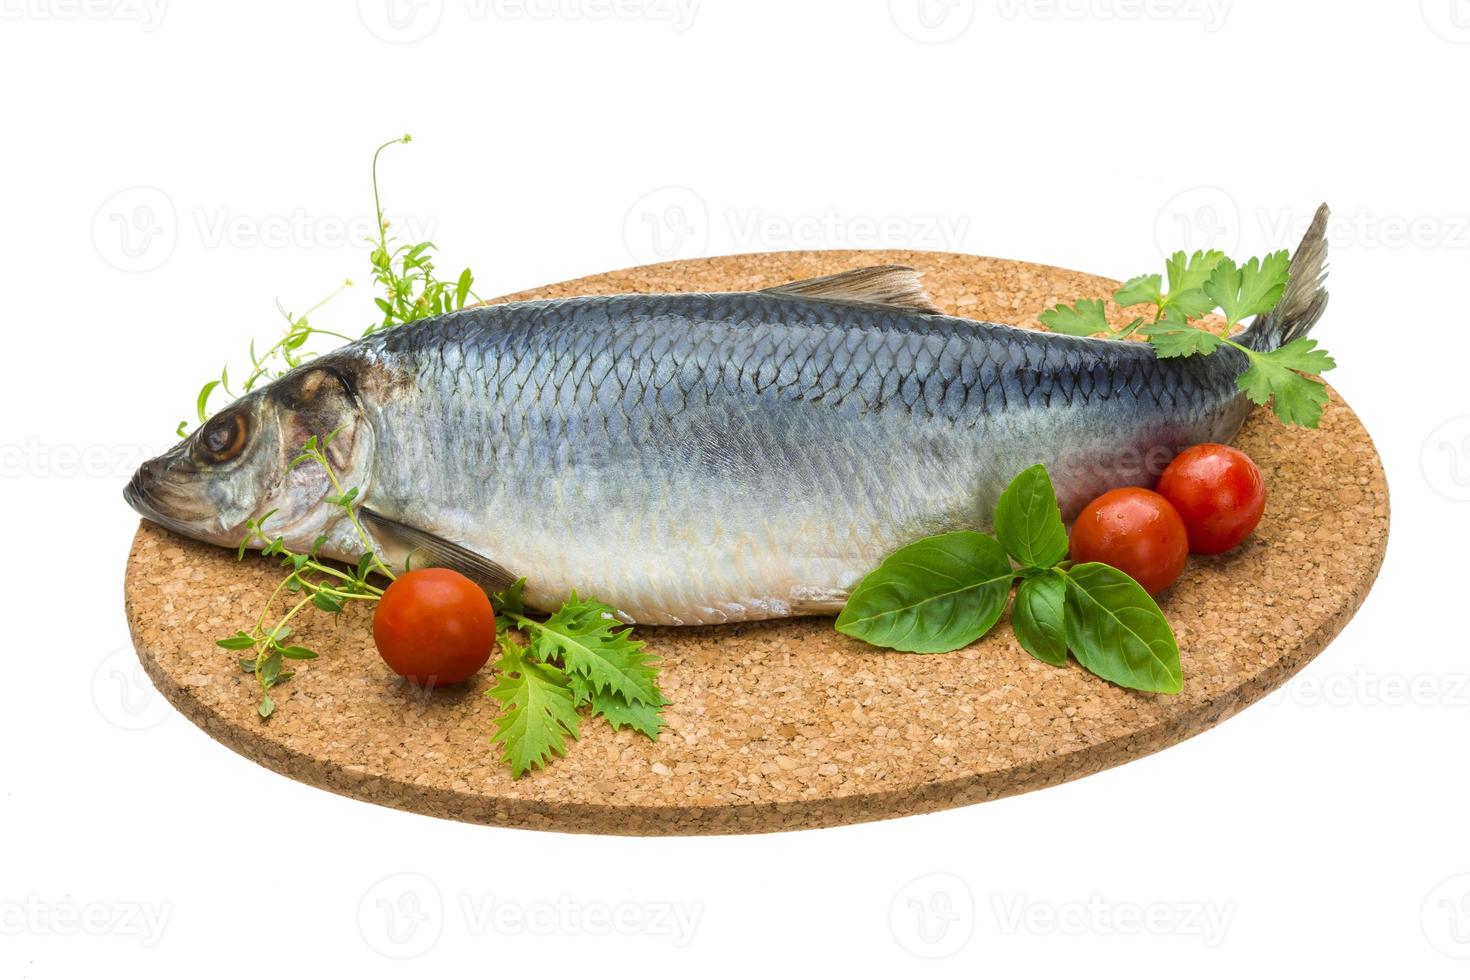 Marinated herring with herbs photo